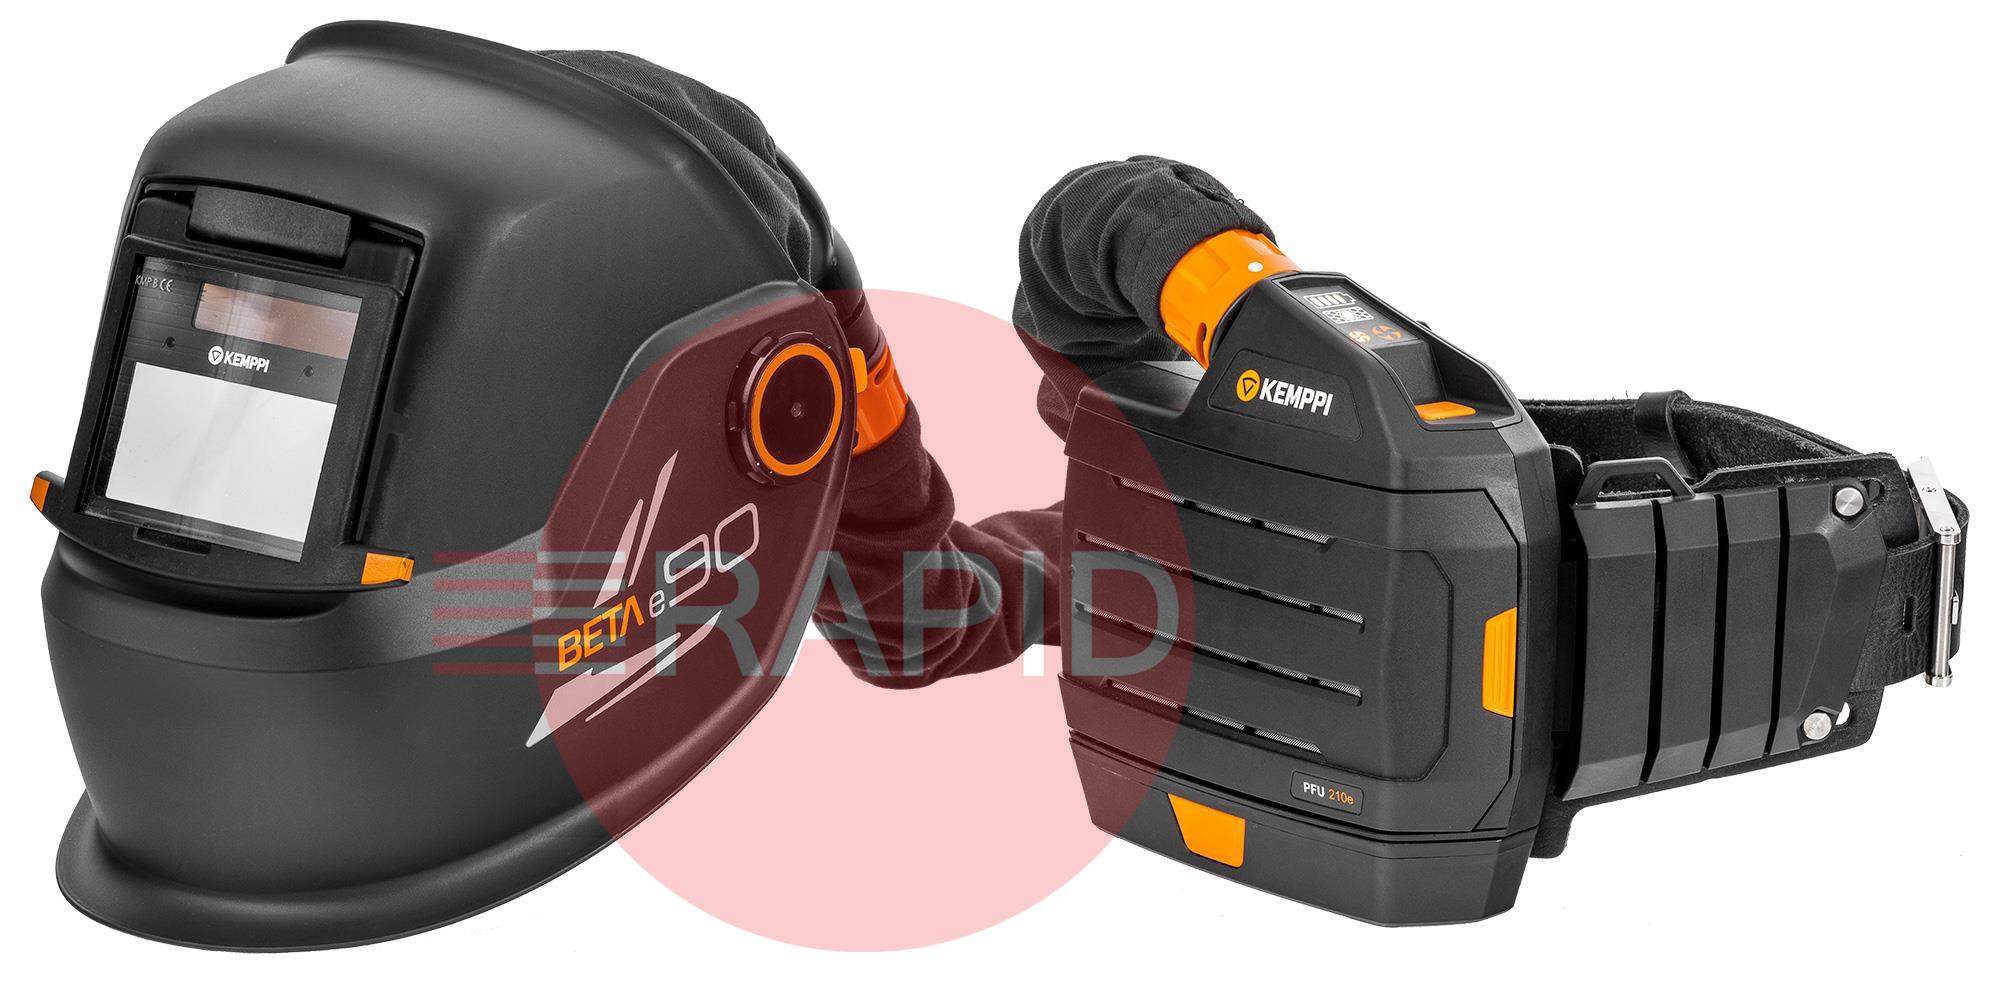 9873036  Kemppi Beta e90 XFA Auto Darkening Welding Helmet & PFU 210e PAPR System, Shades 9-15